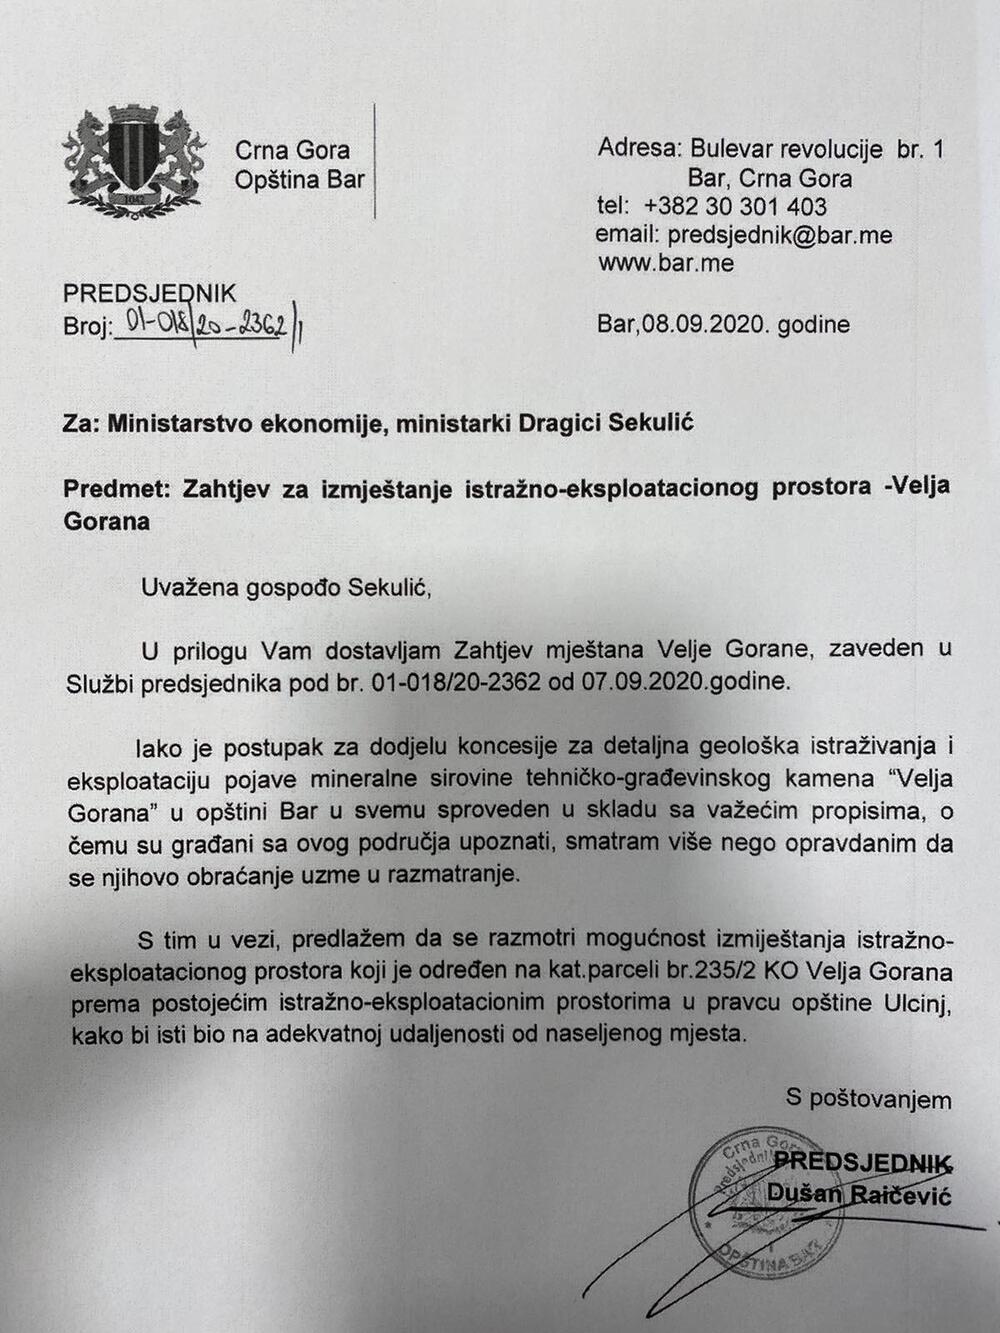 Dopis Dušana Raičevića